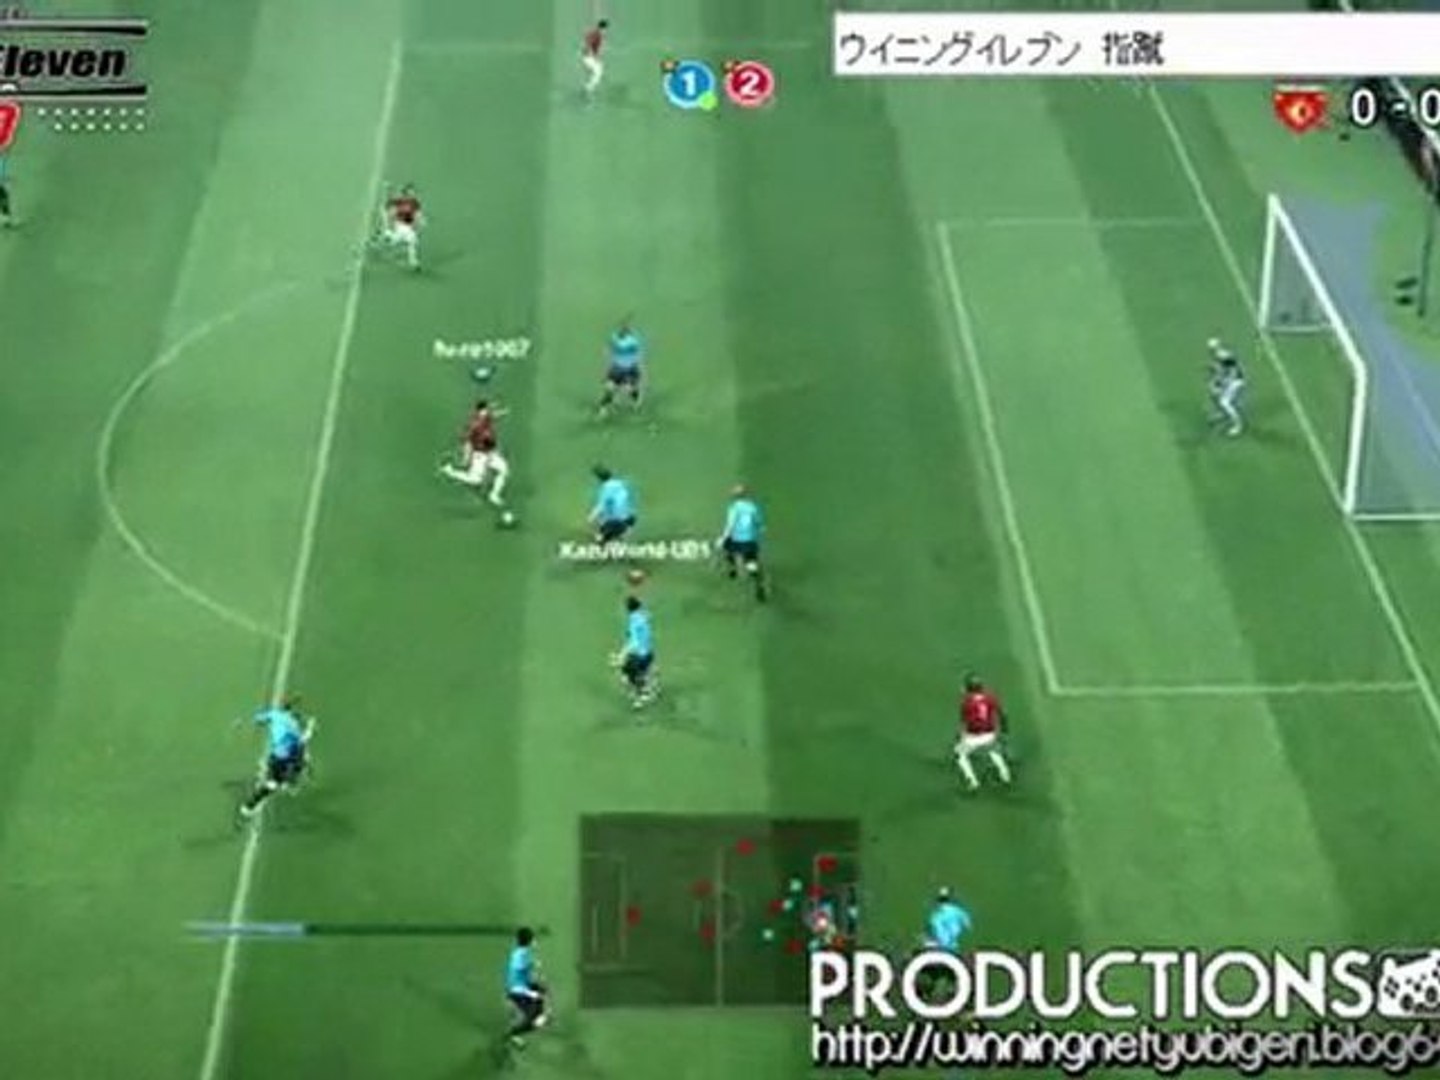 Dailymotion Video Player ウイニングイレブン10 指蹴動画 Goal Goal Goal Vol 24